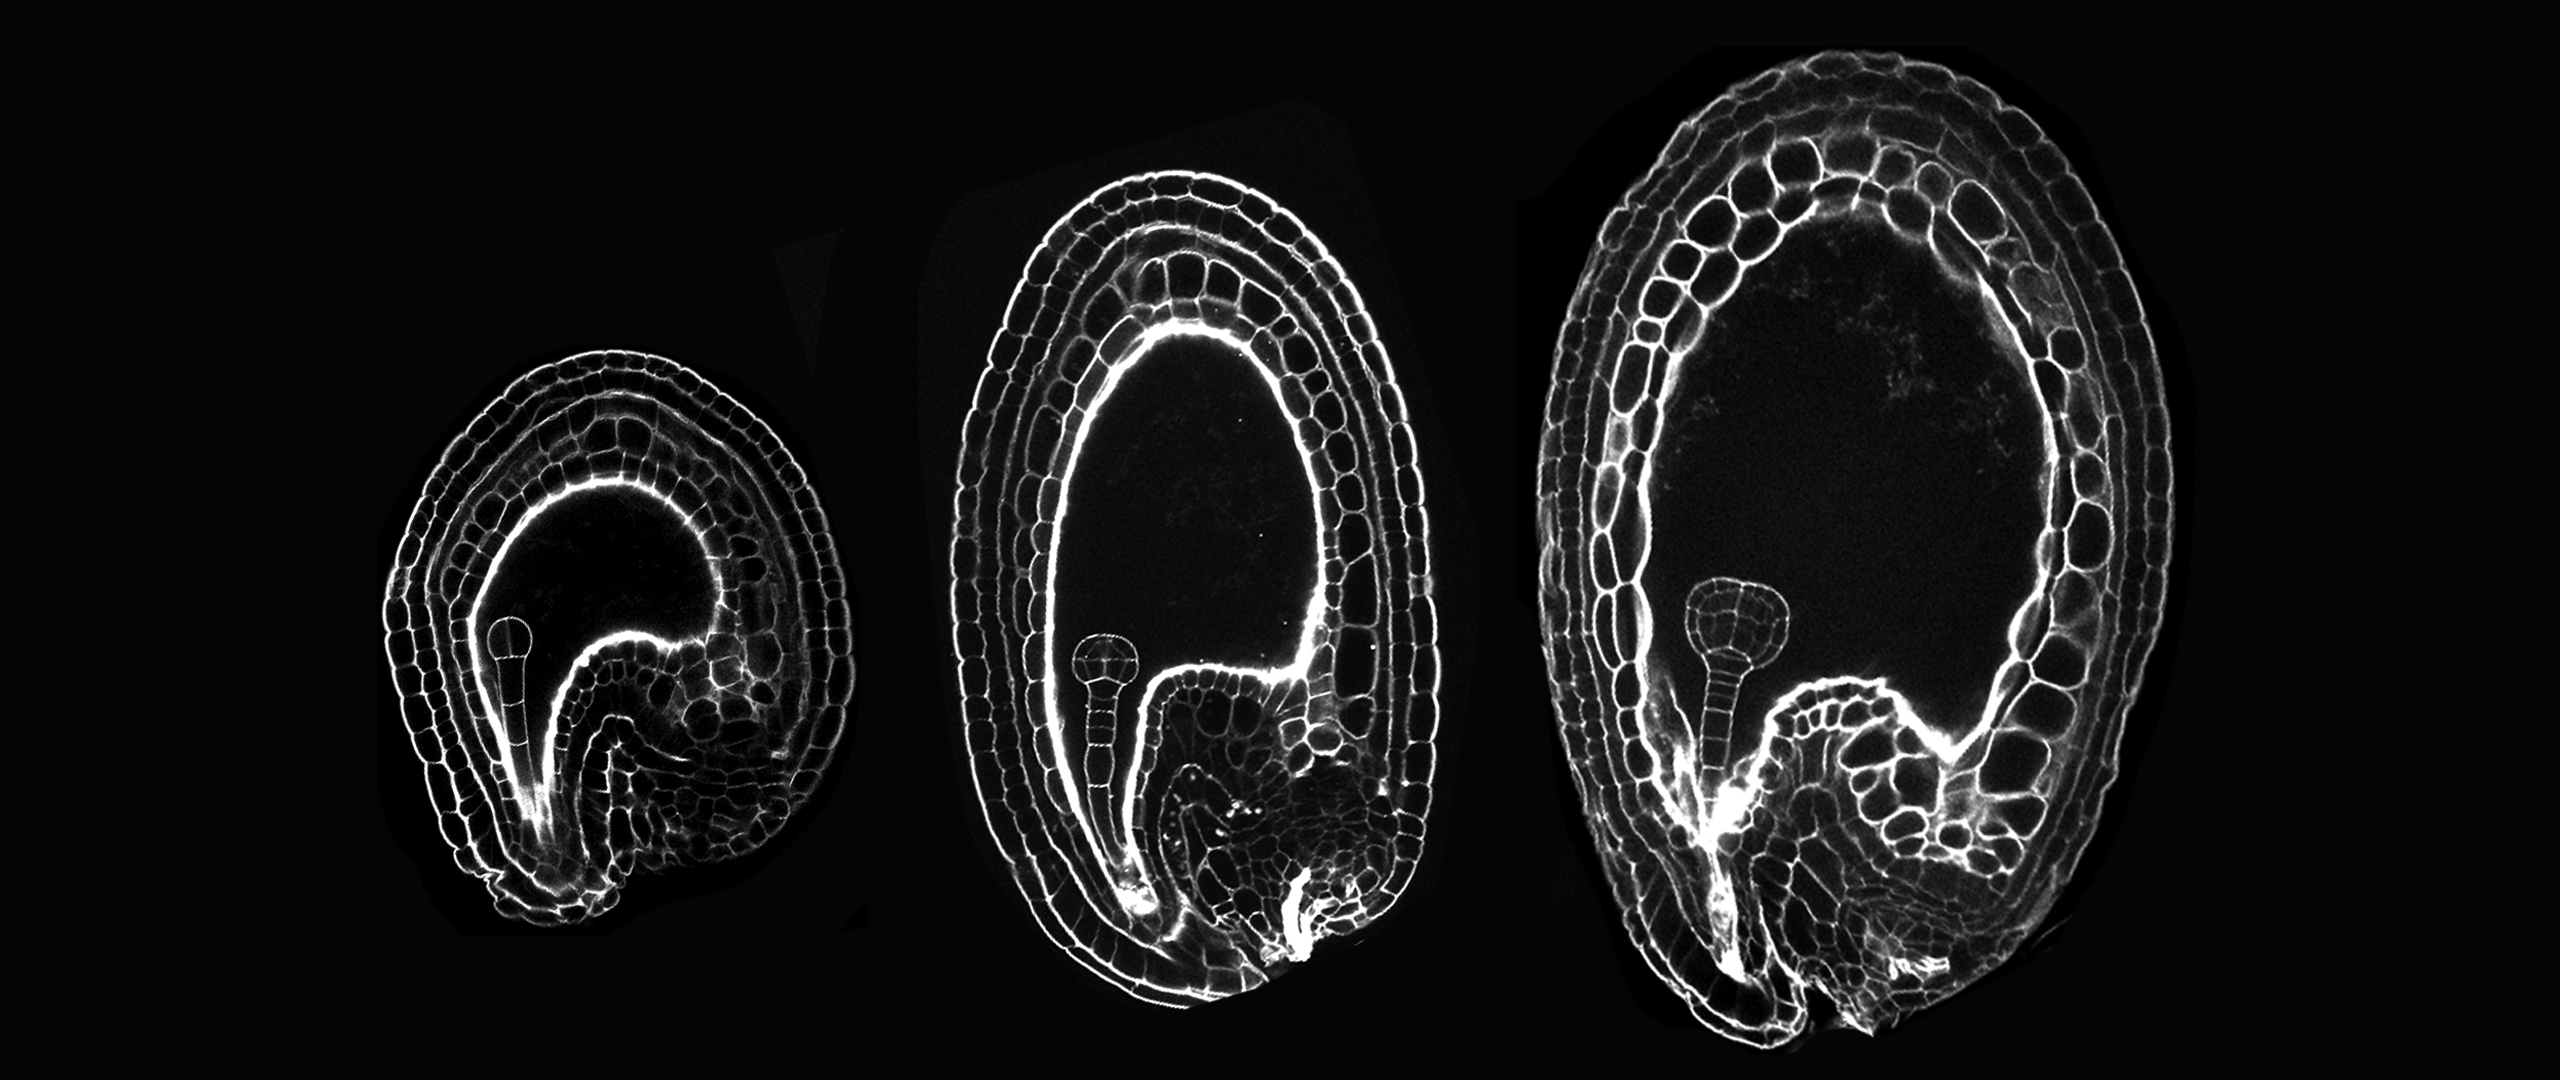 Arabidopsis' embryos